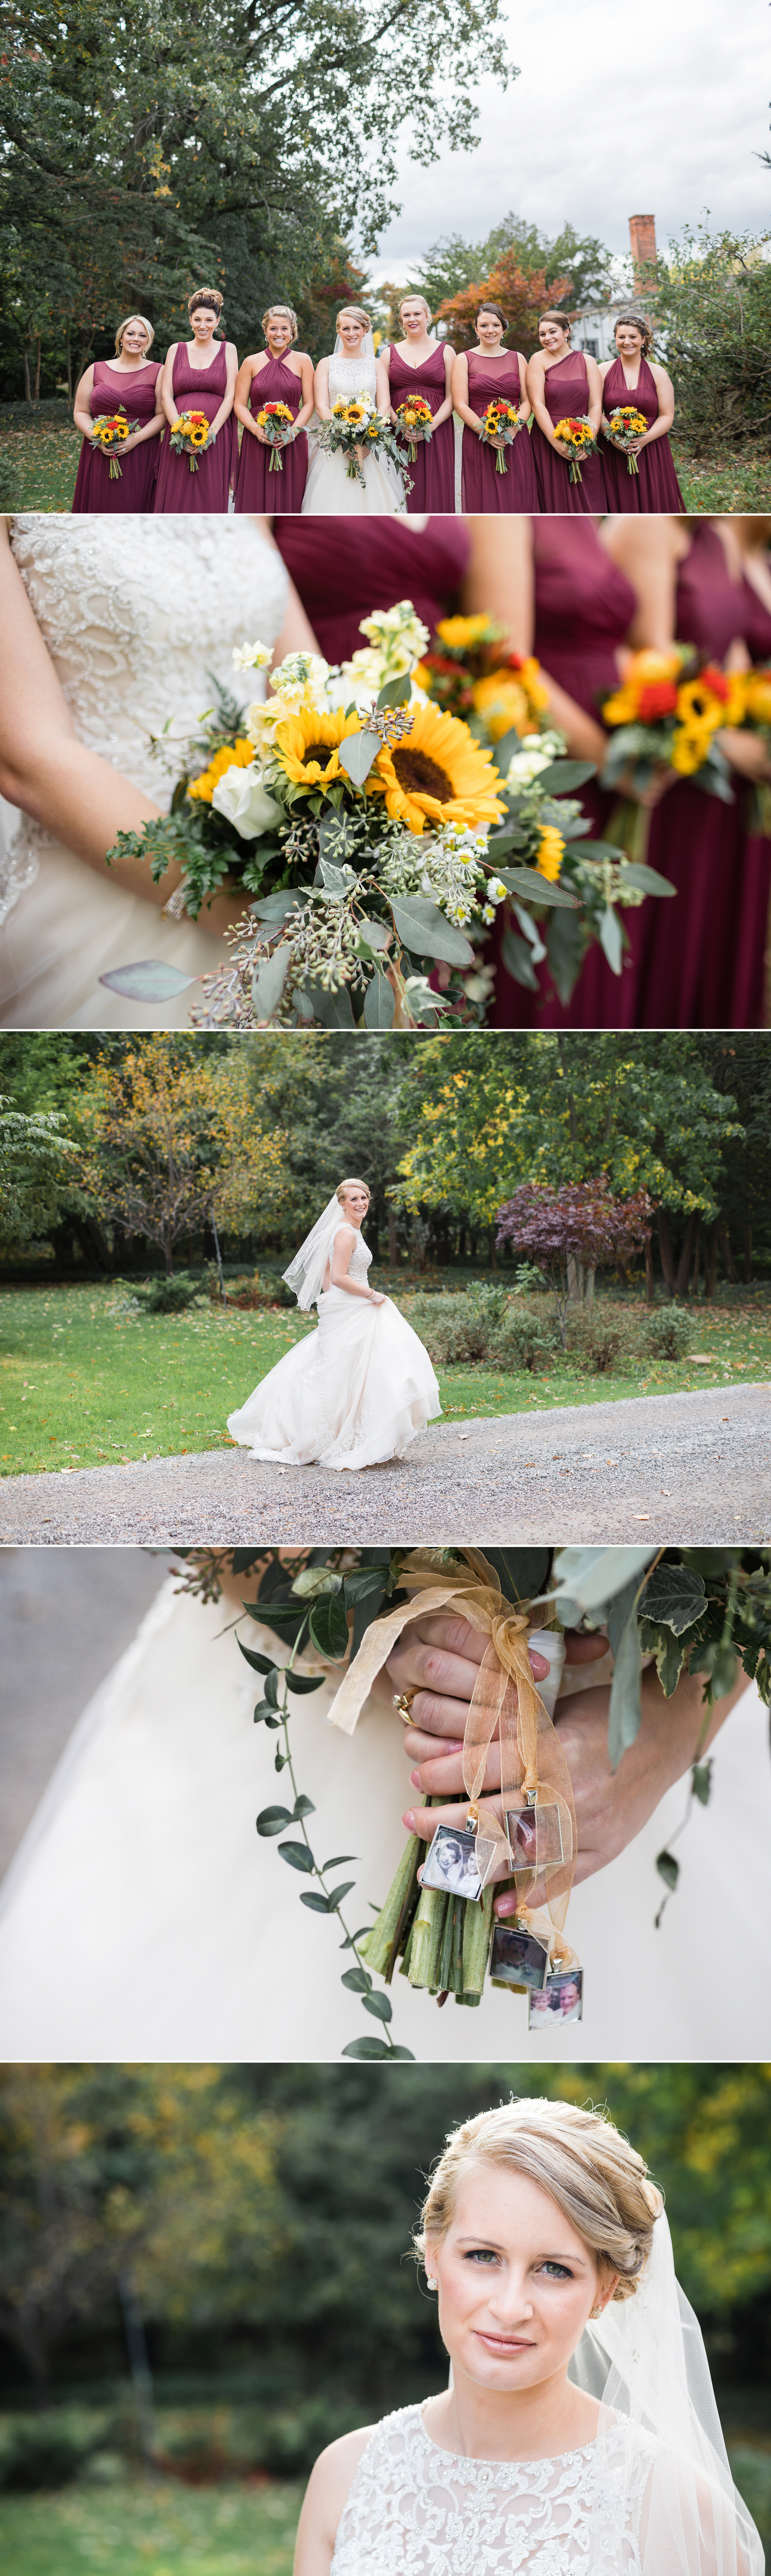 images of bride and bridesmaids Michigan Wedding Photographer